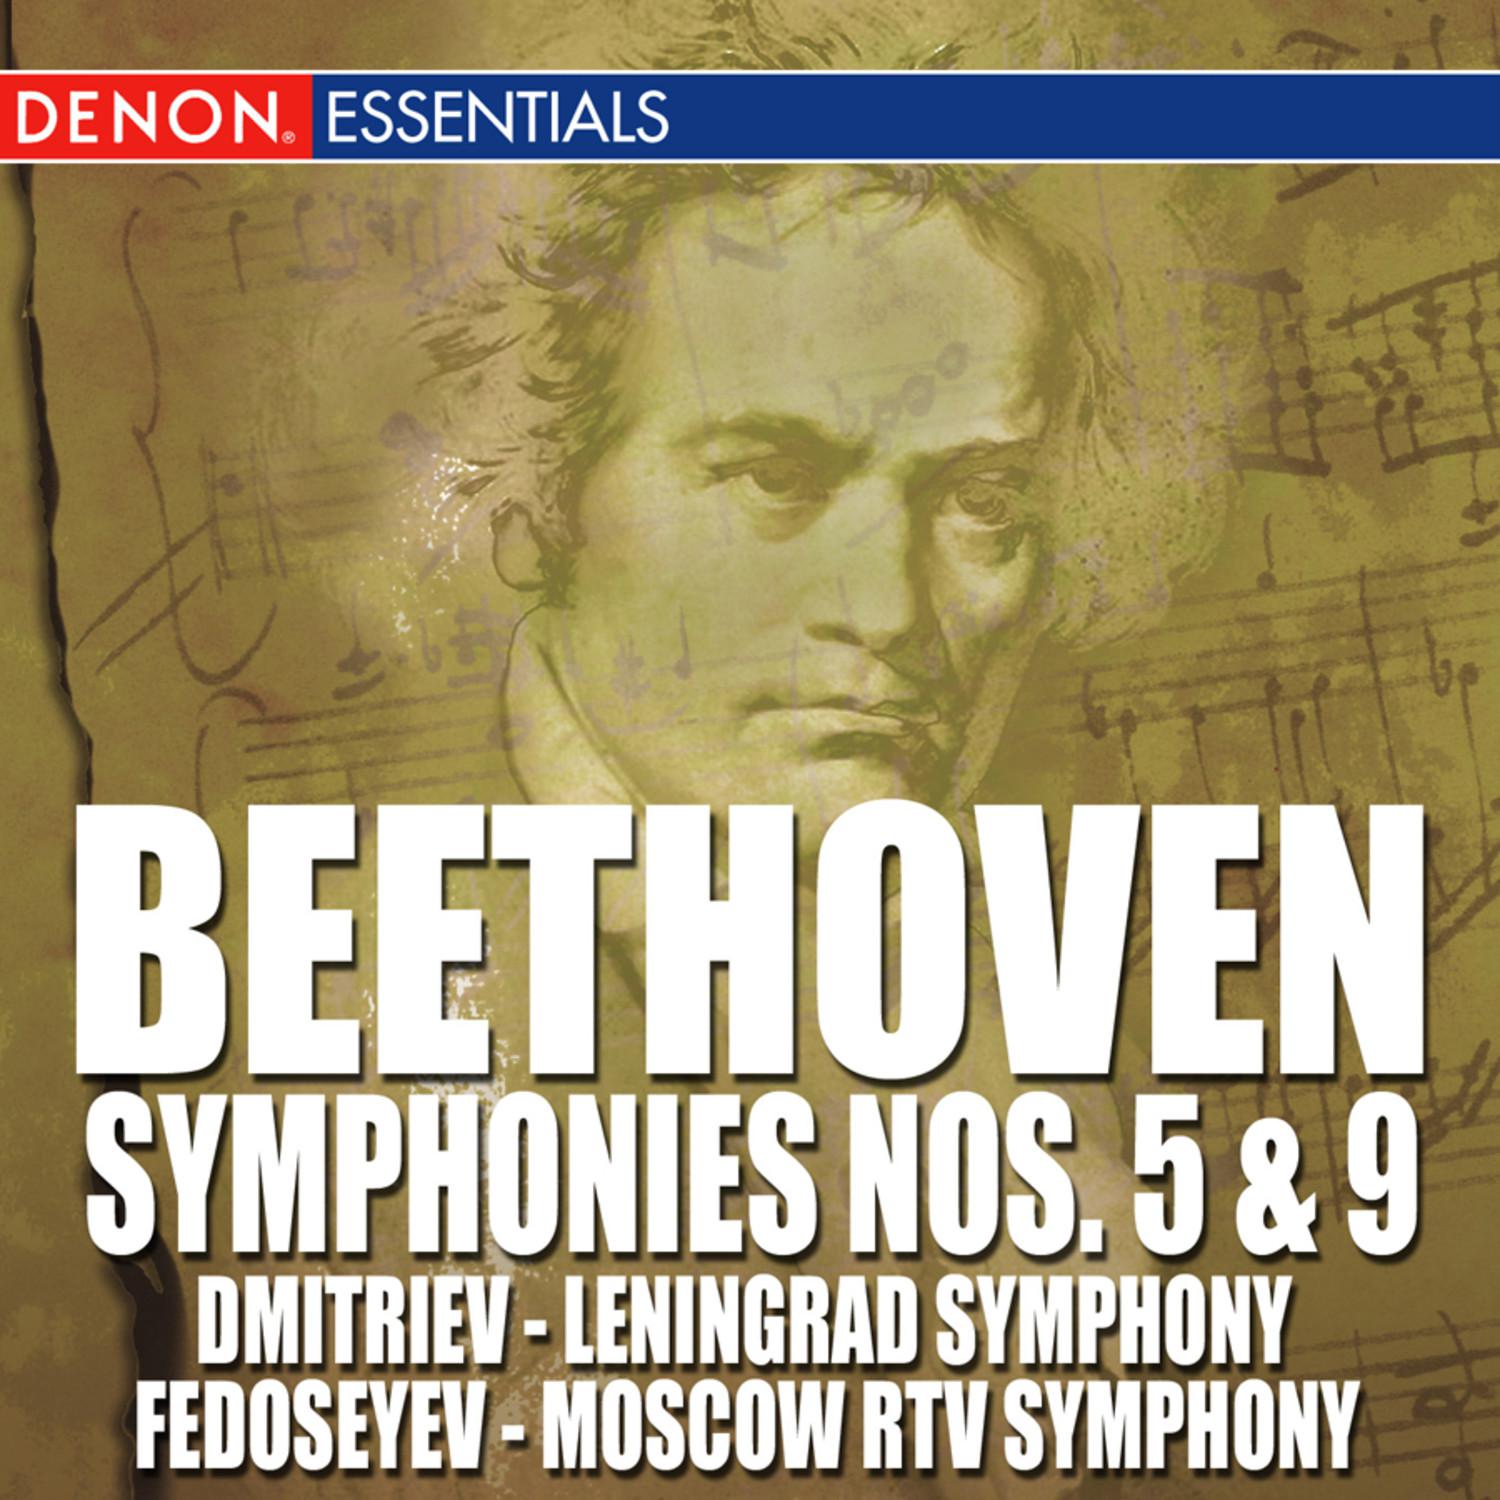 Beethoven: Symphonies Nos. 5 & 9